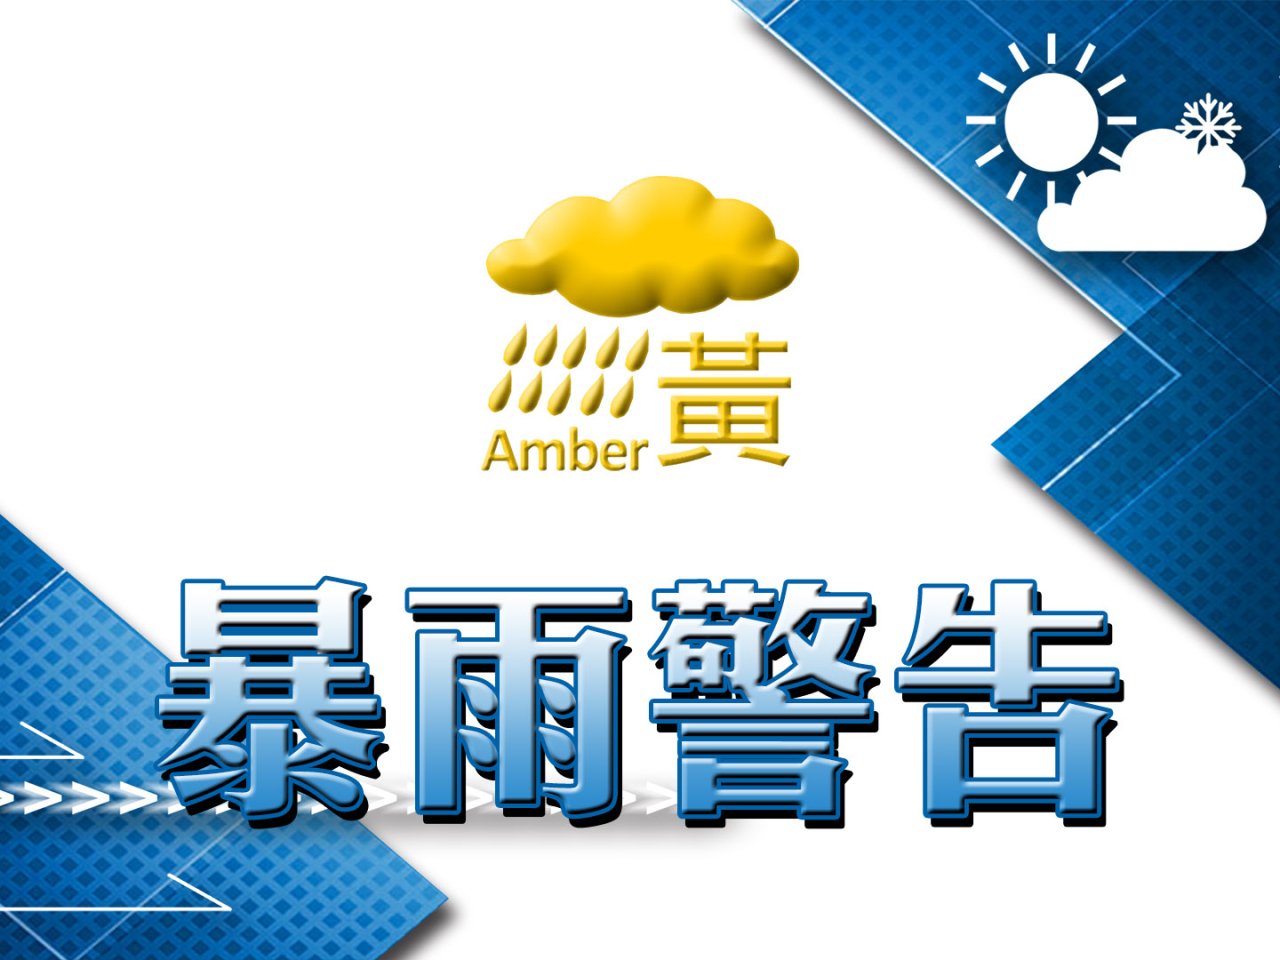 Observatory issues Amber Rainstorm Warning